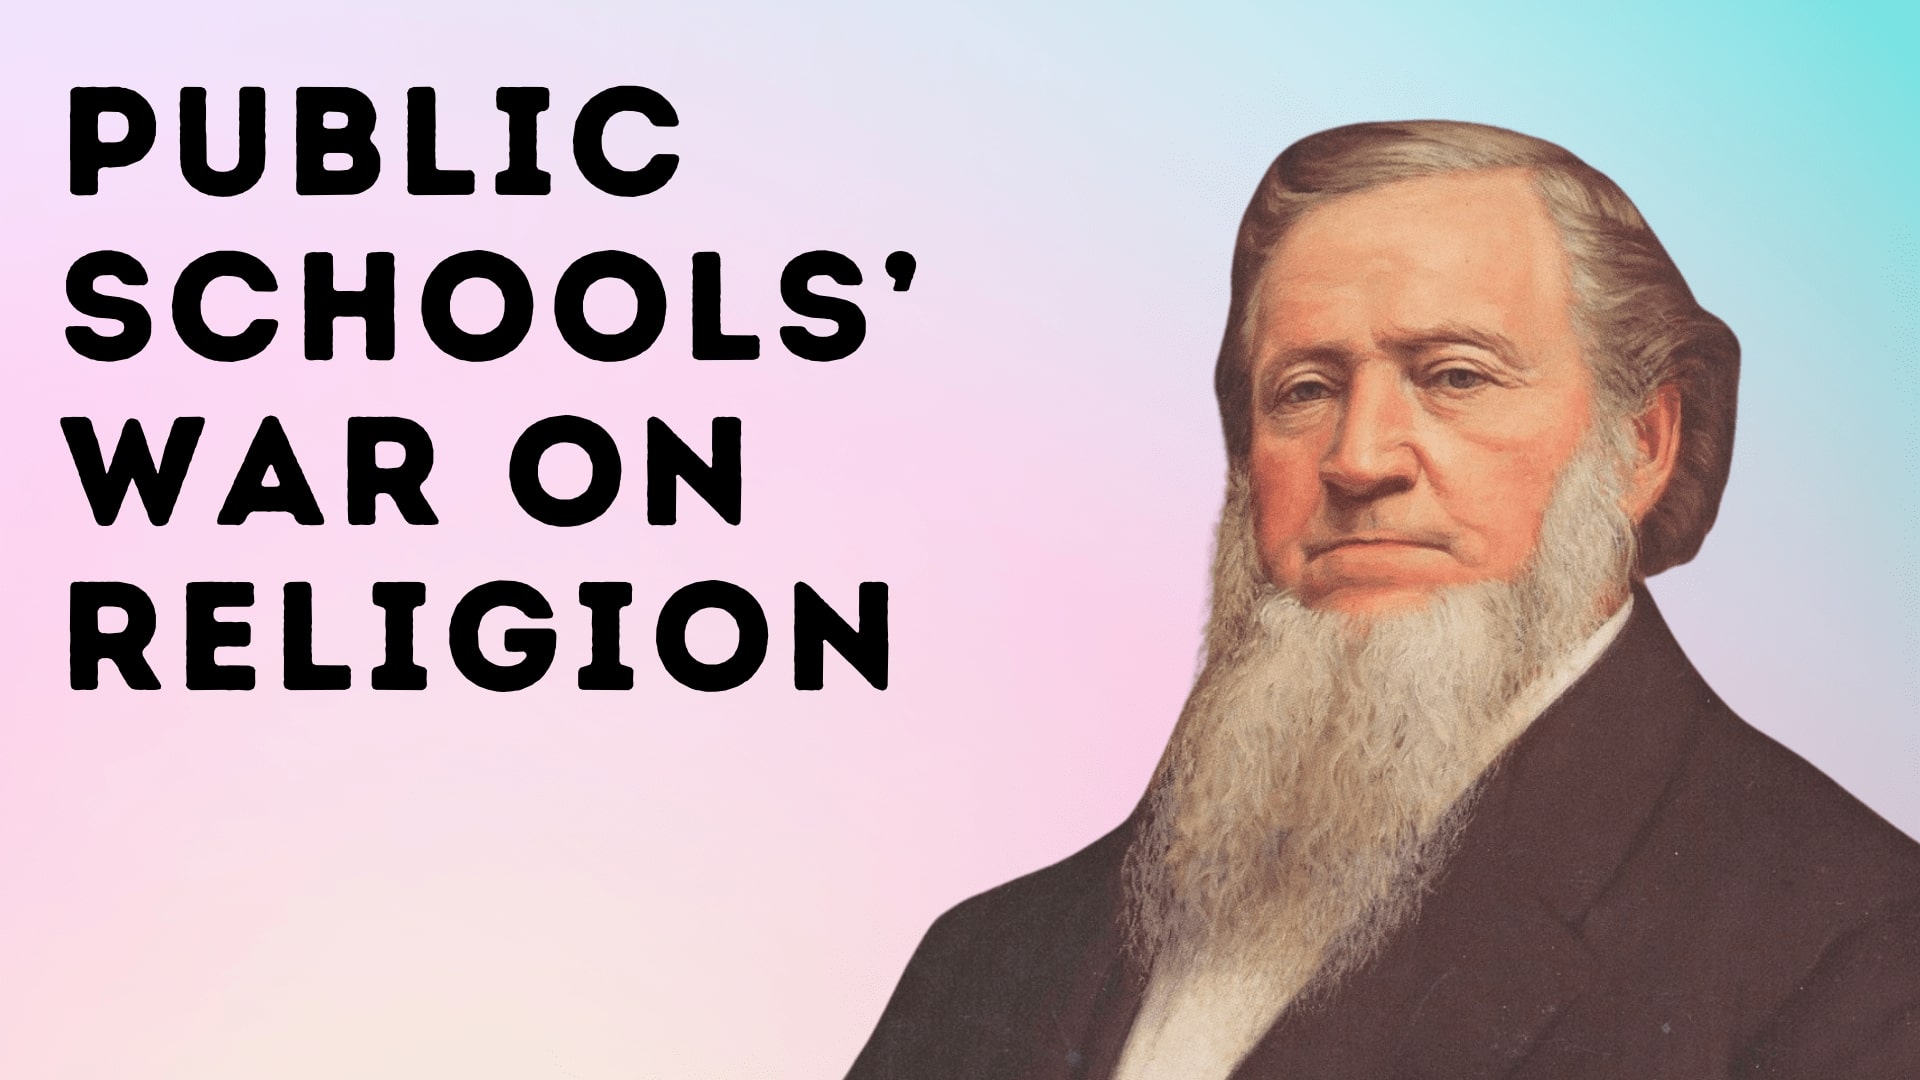 Public schools’ war on religion